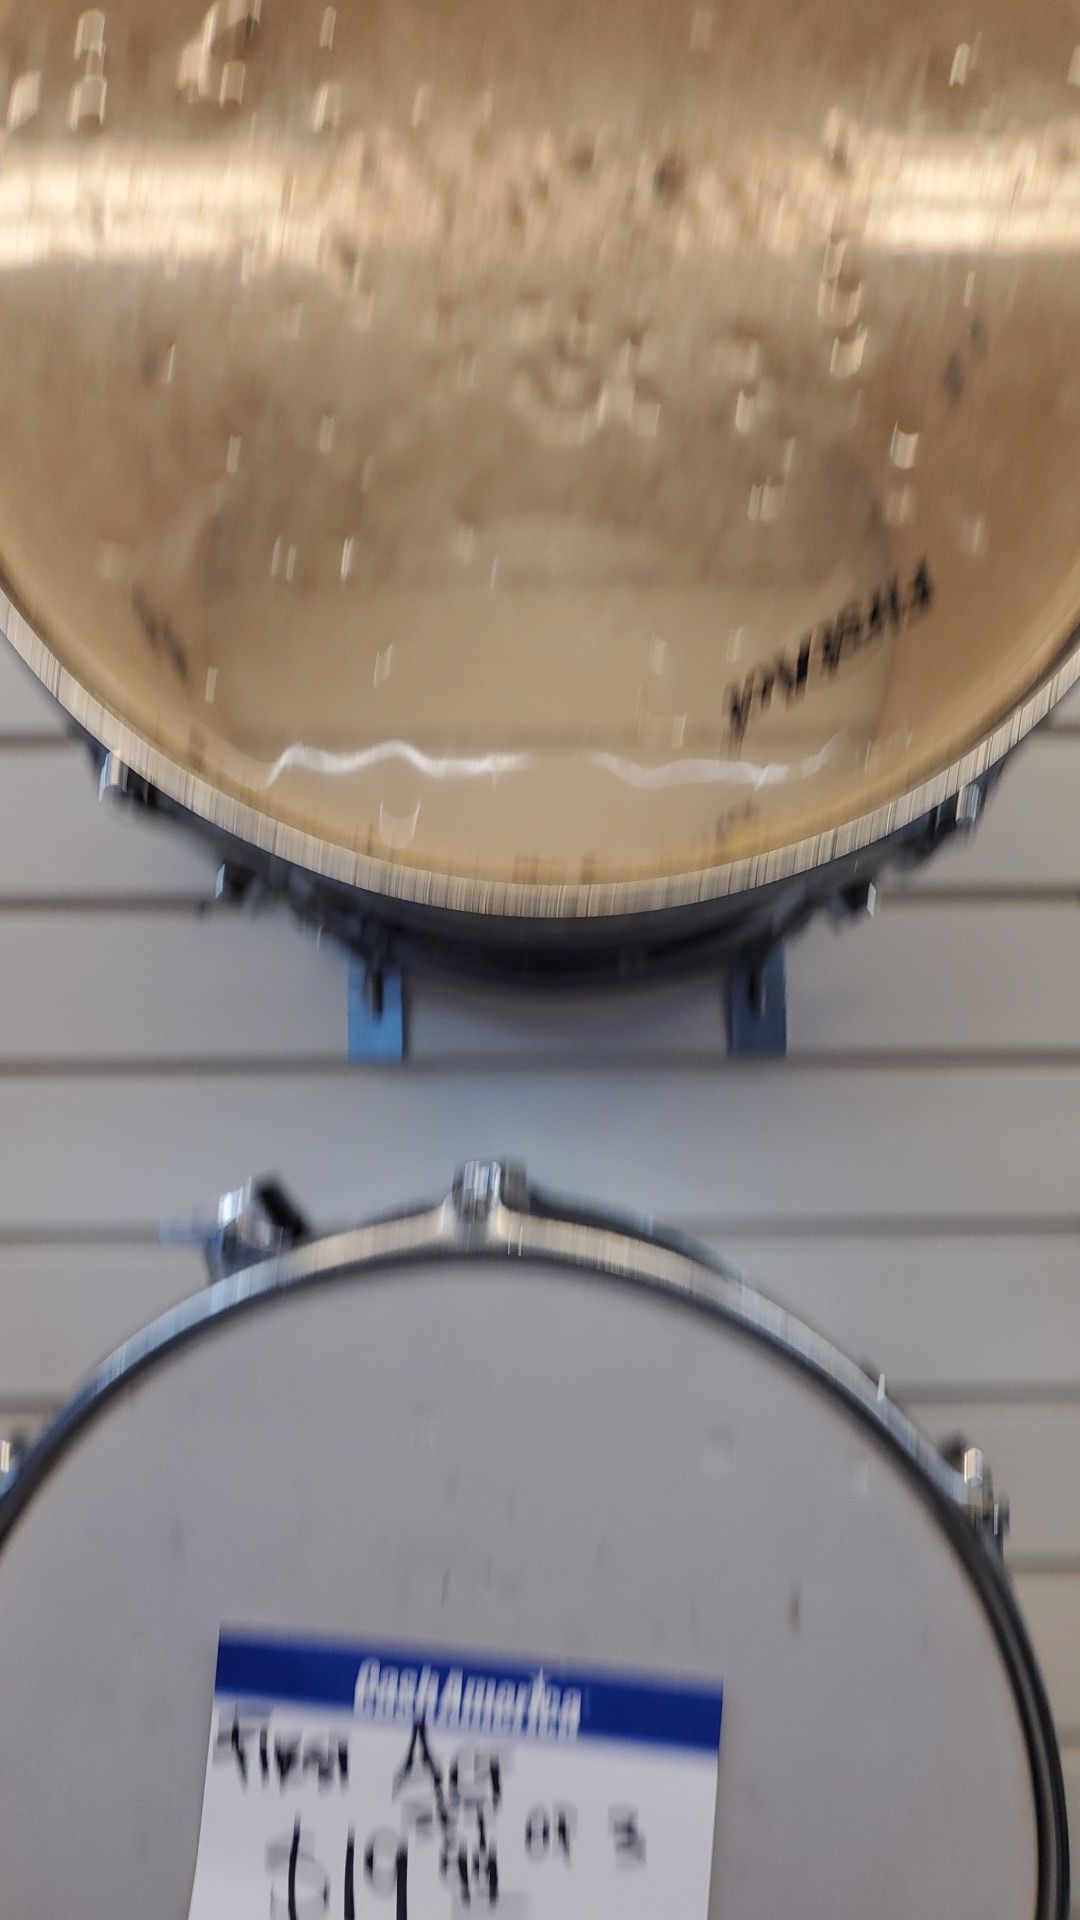 Set of 3 drums